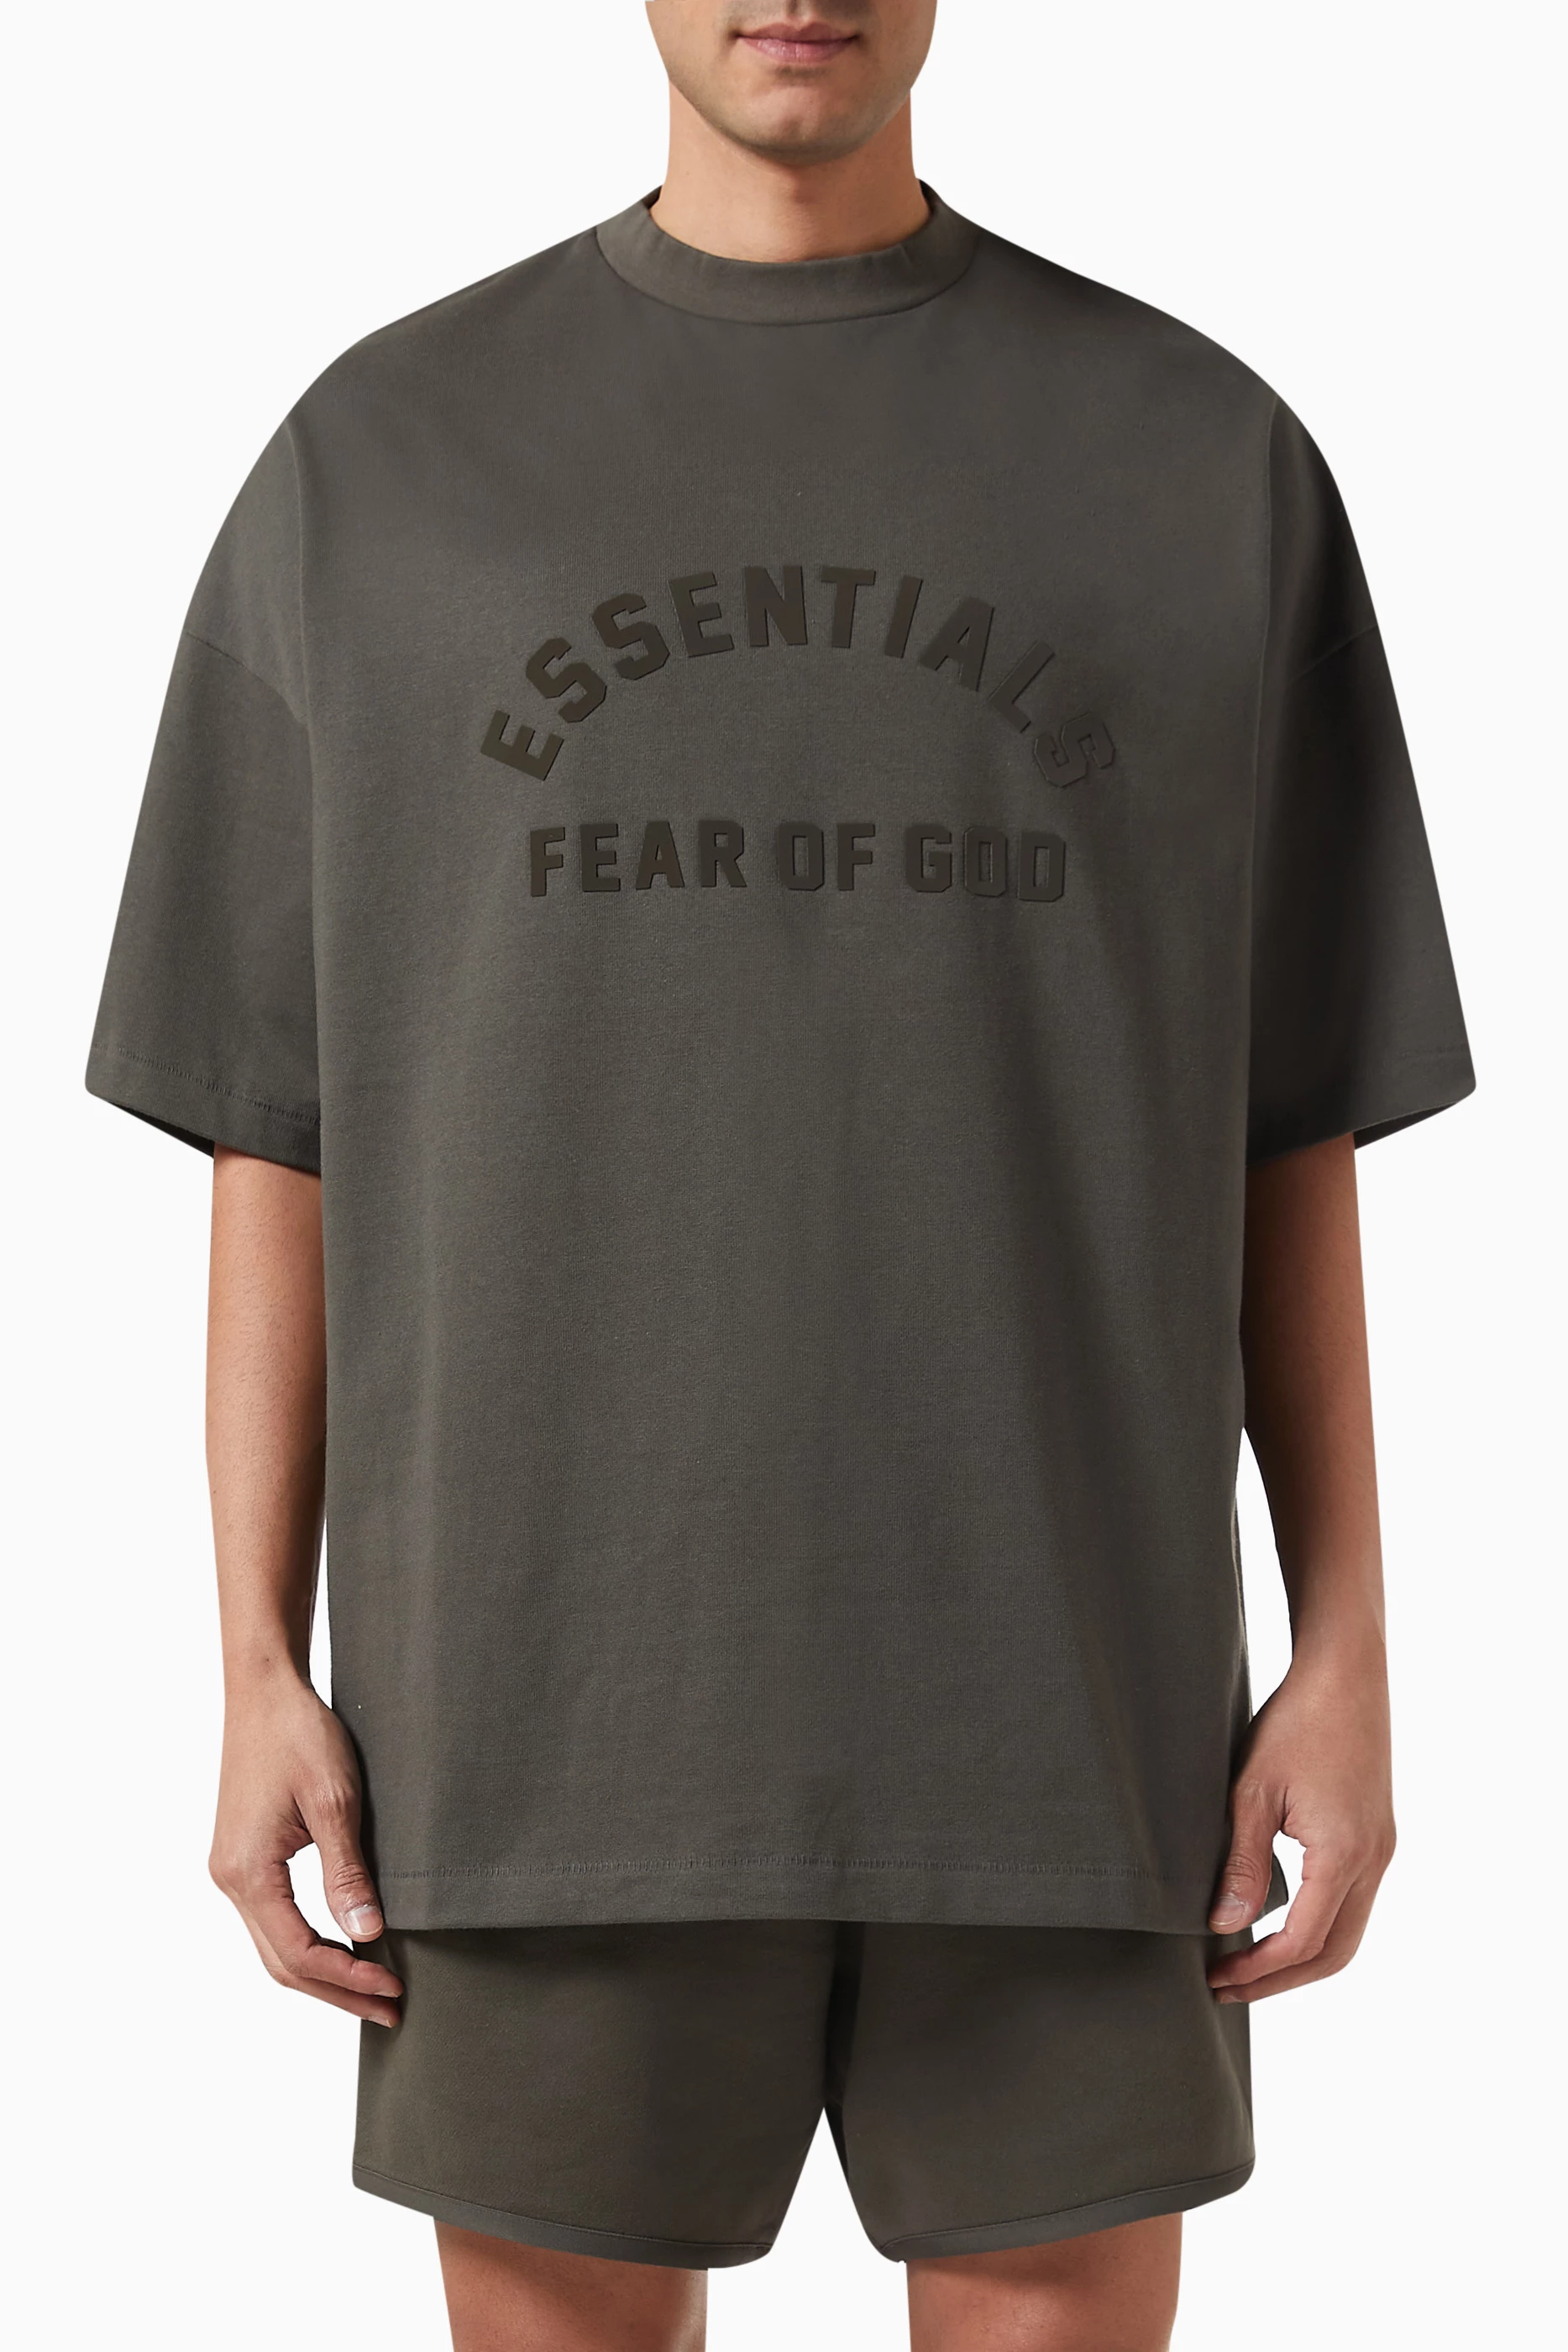 Buy Fear of God Essentials Grey Essentials Crewneck T-shirt in